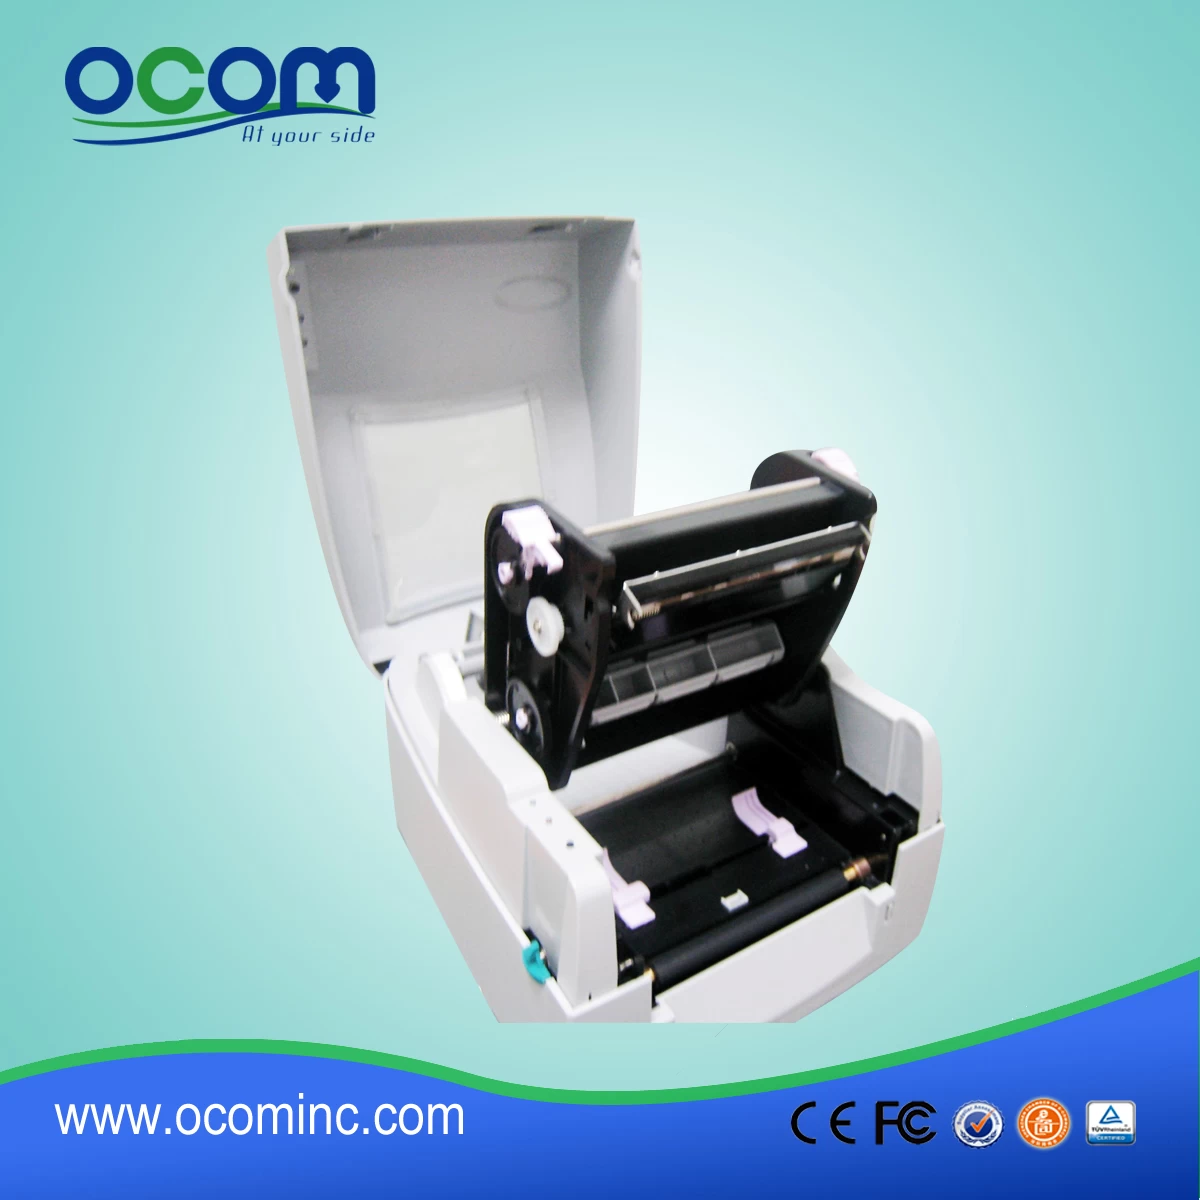 Thermal Transfer and Direct Thermal Label Printer machine